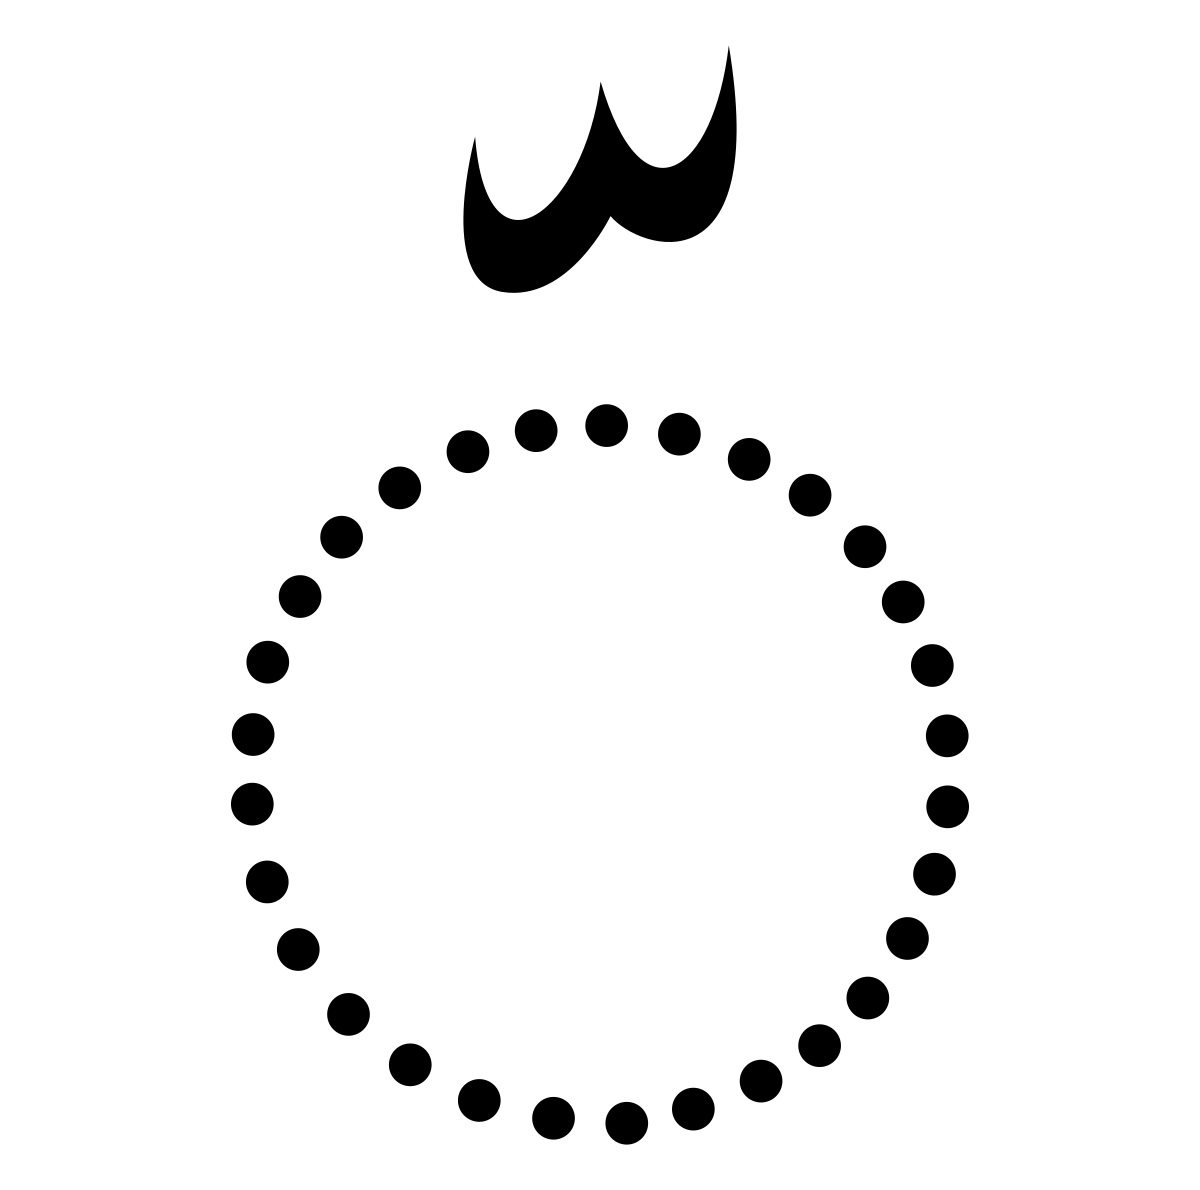 Tashdid Sign in Persian language